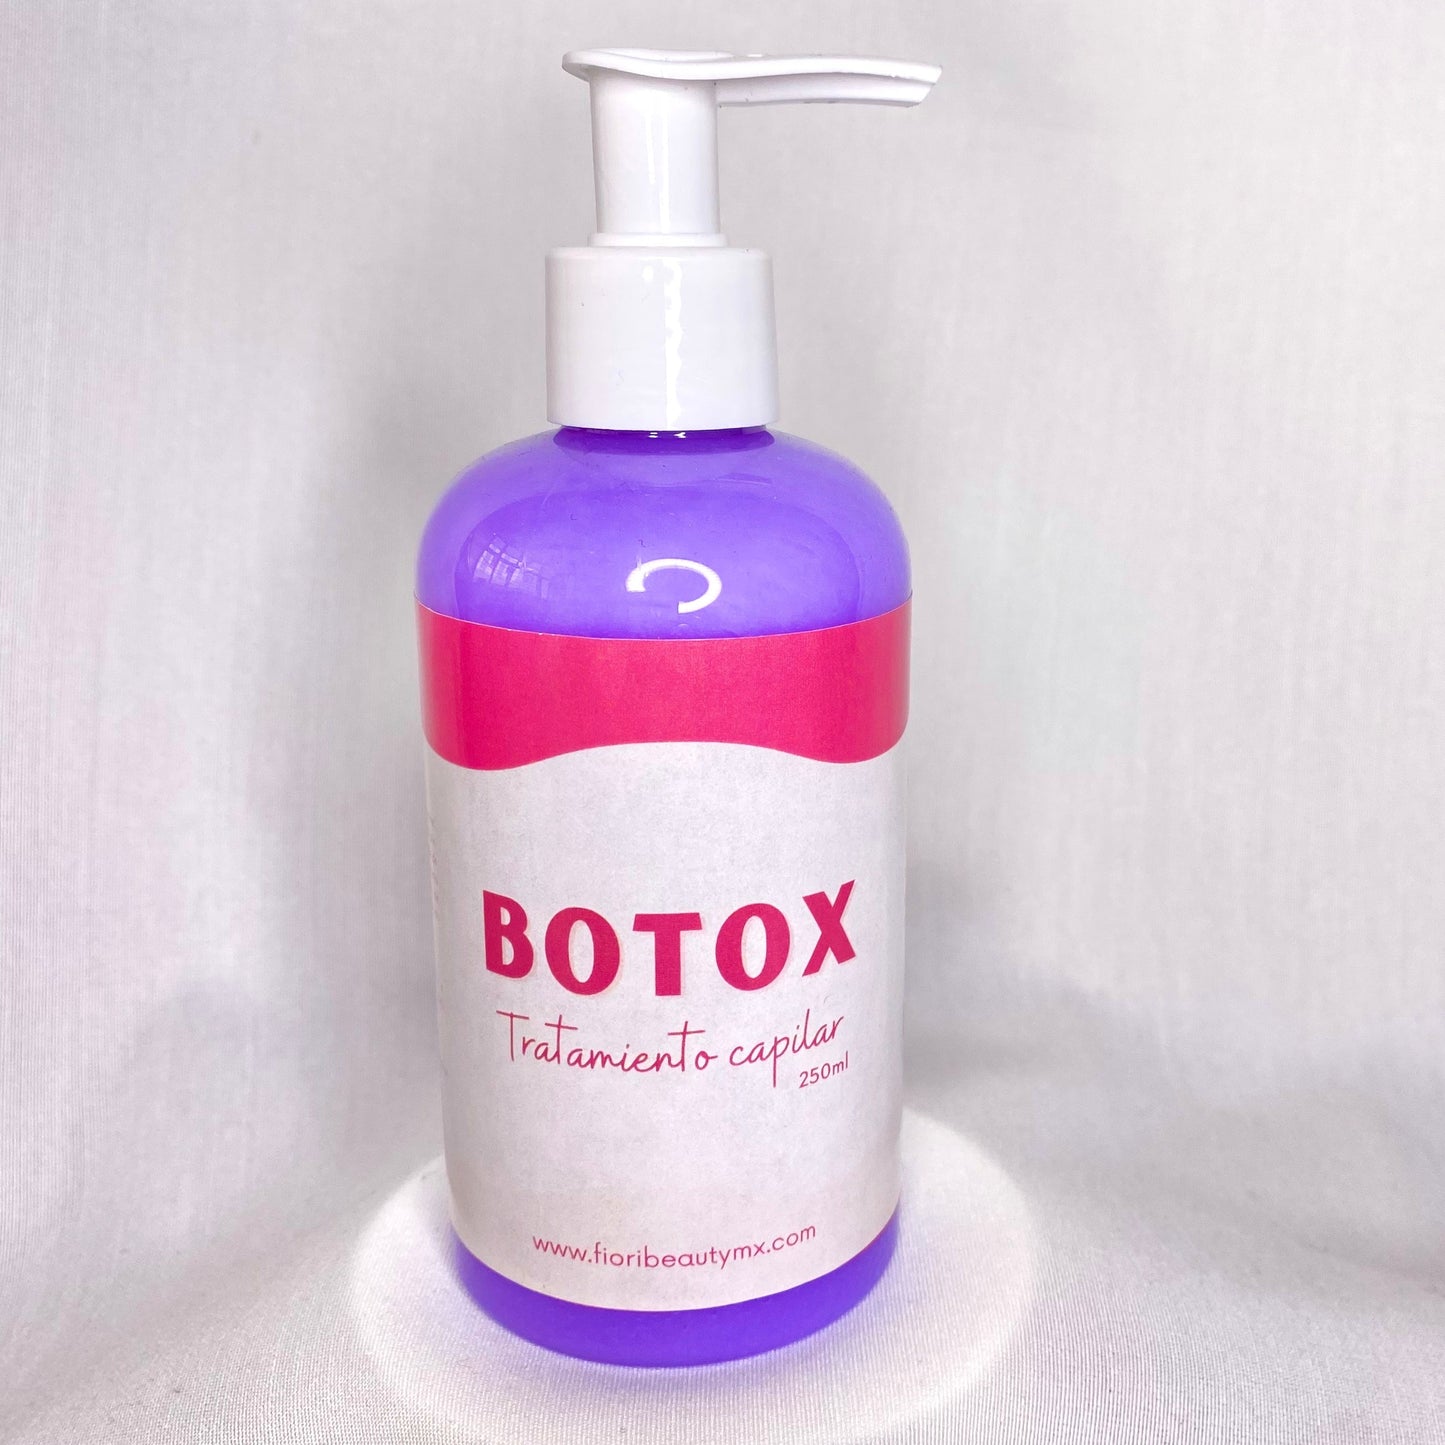 Tratamiento capilar con BOTOX